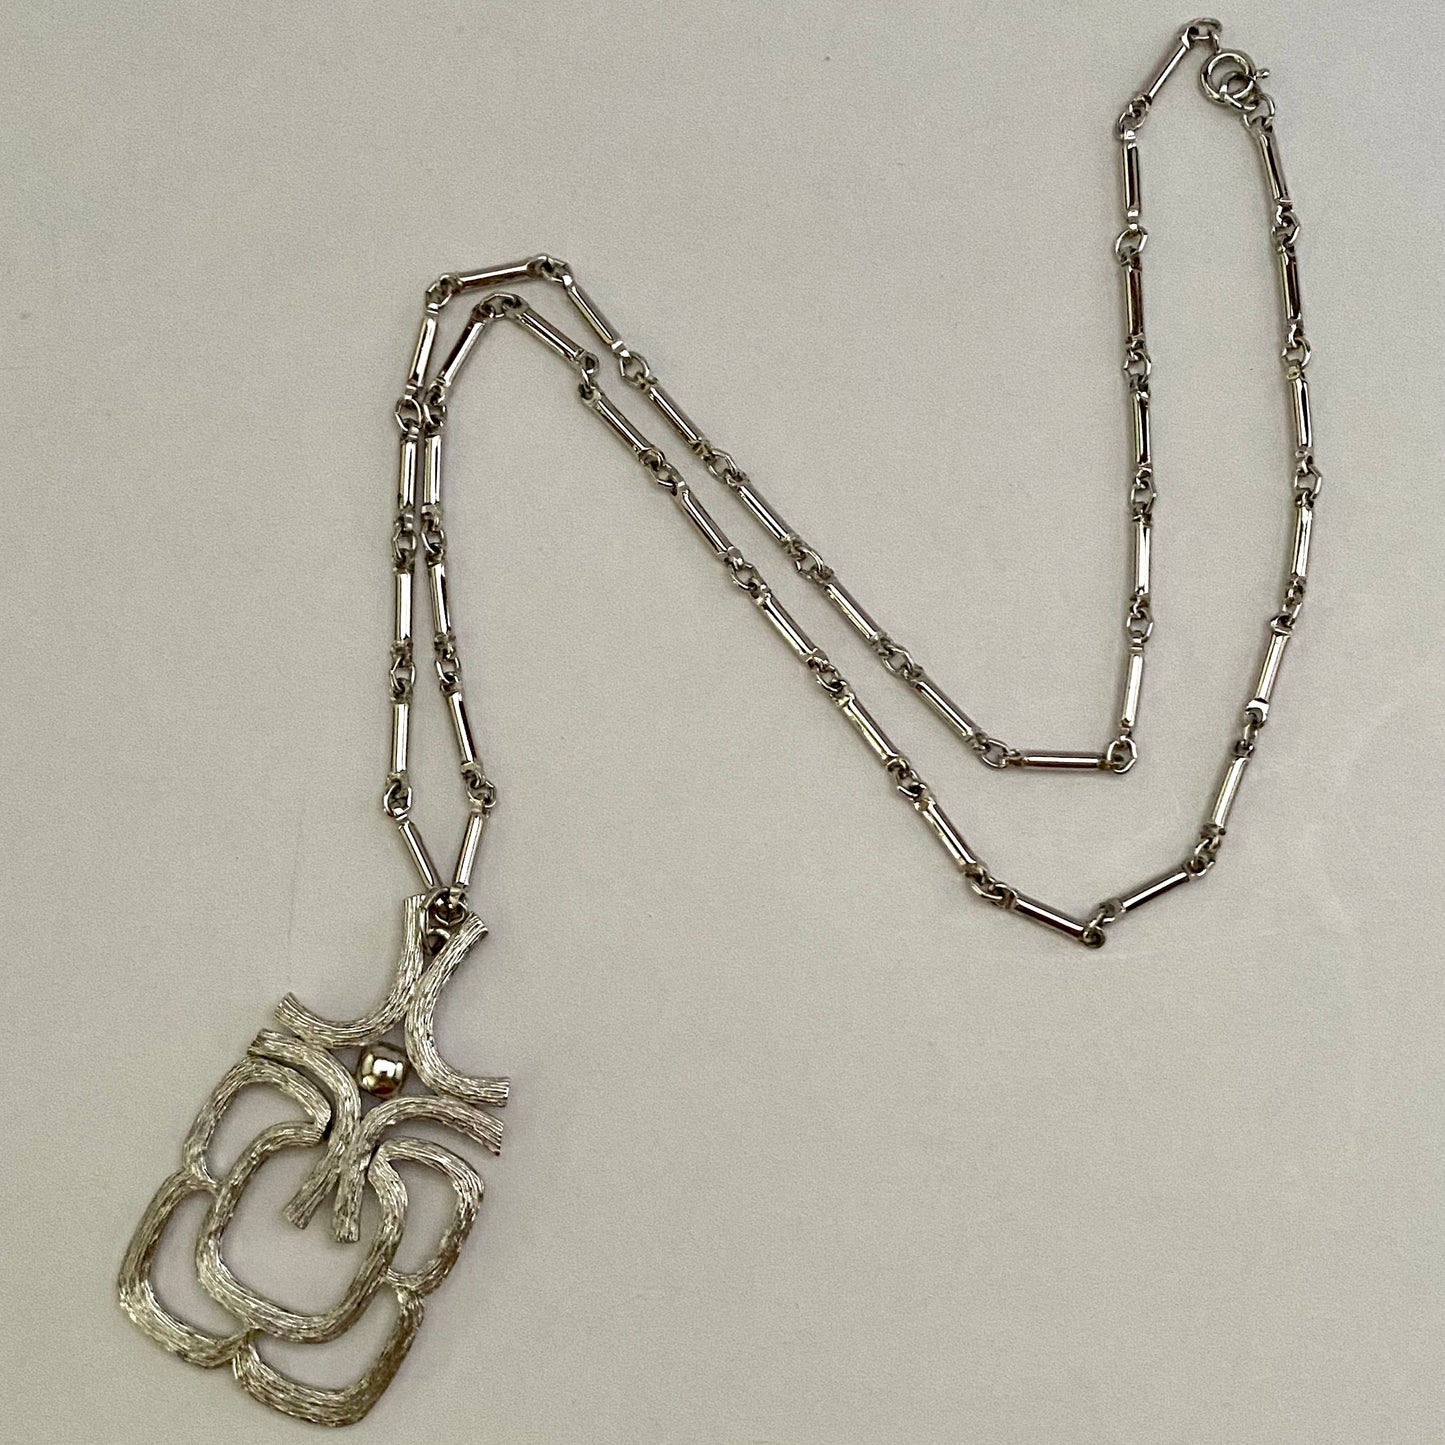 1974 Avon Mayan Pendant Necklace